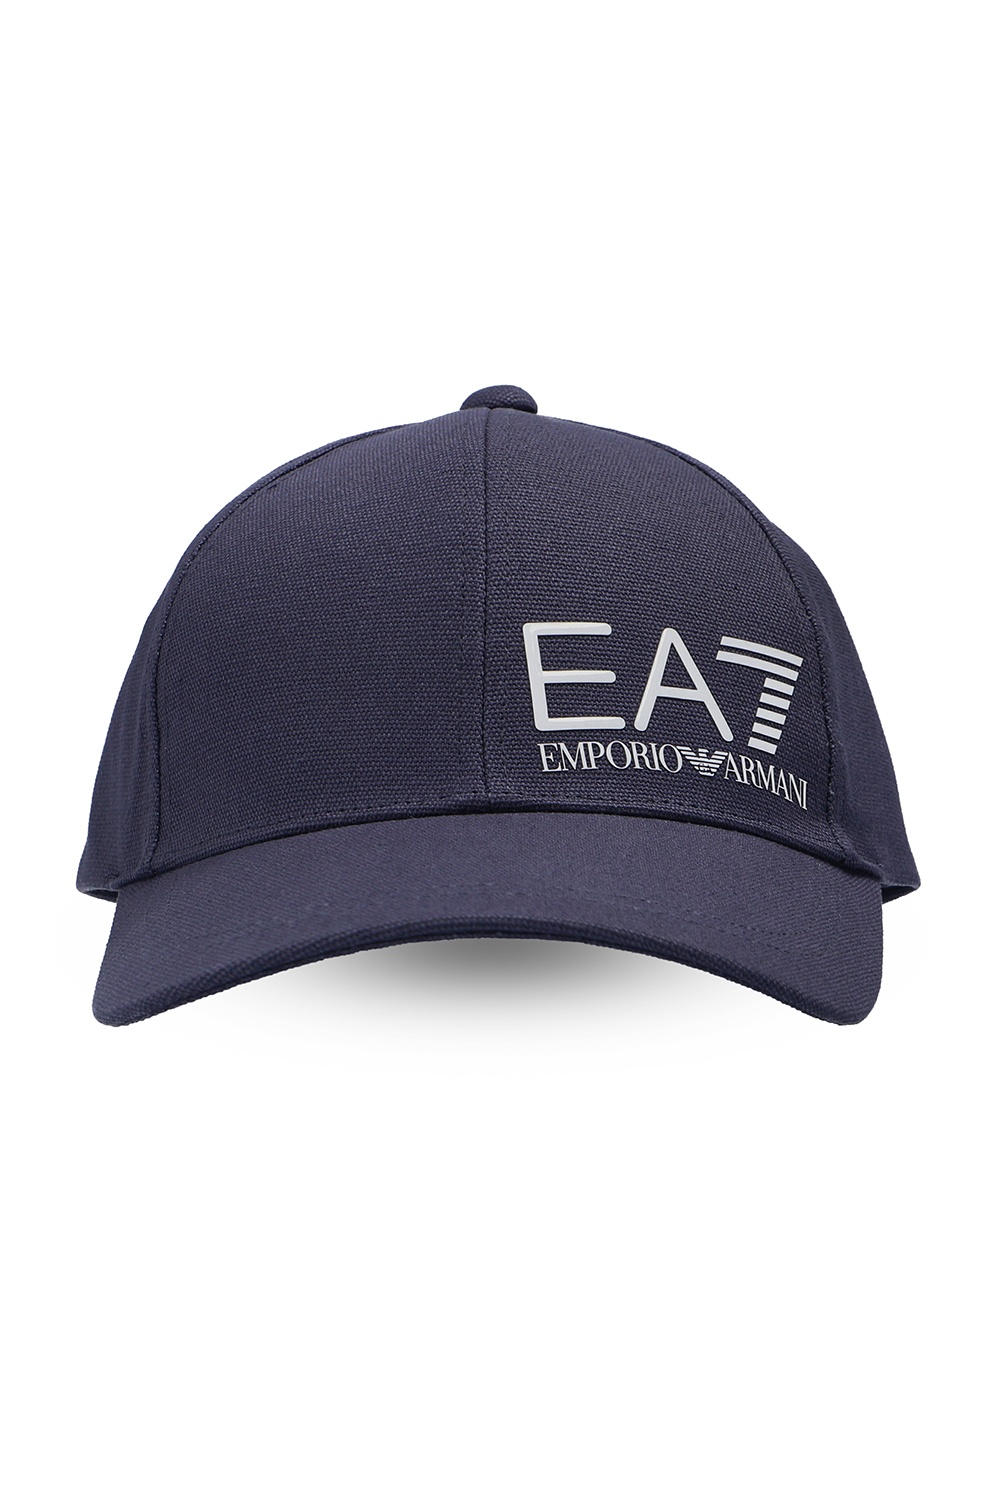 EA7 Emporio laptopuri armani Baseball cap with logo